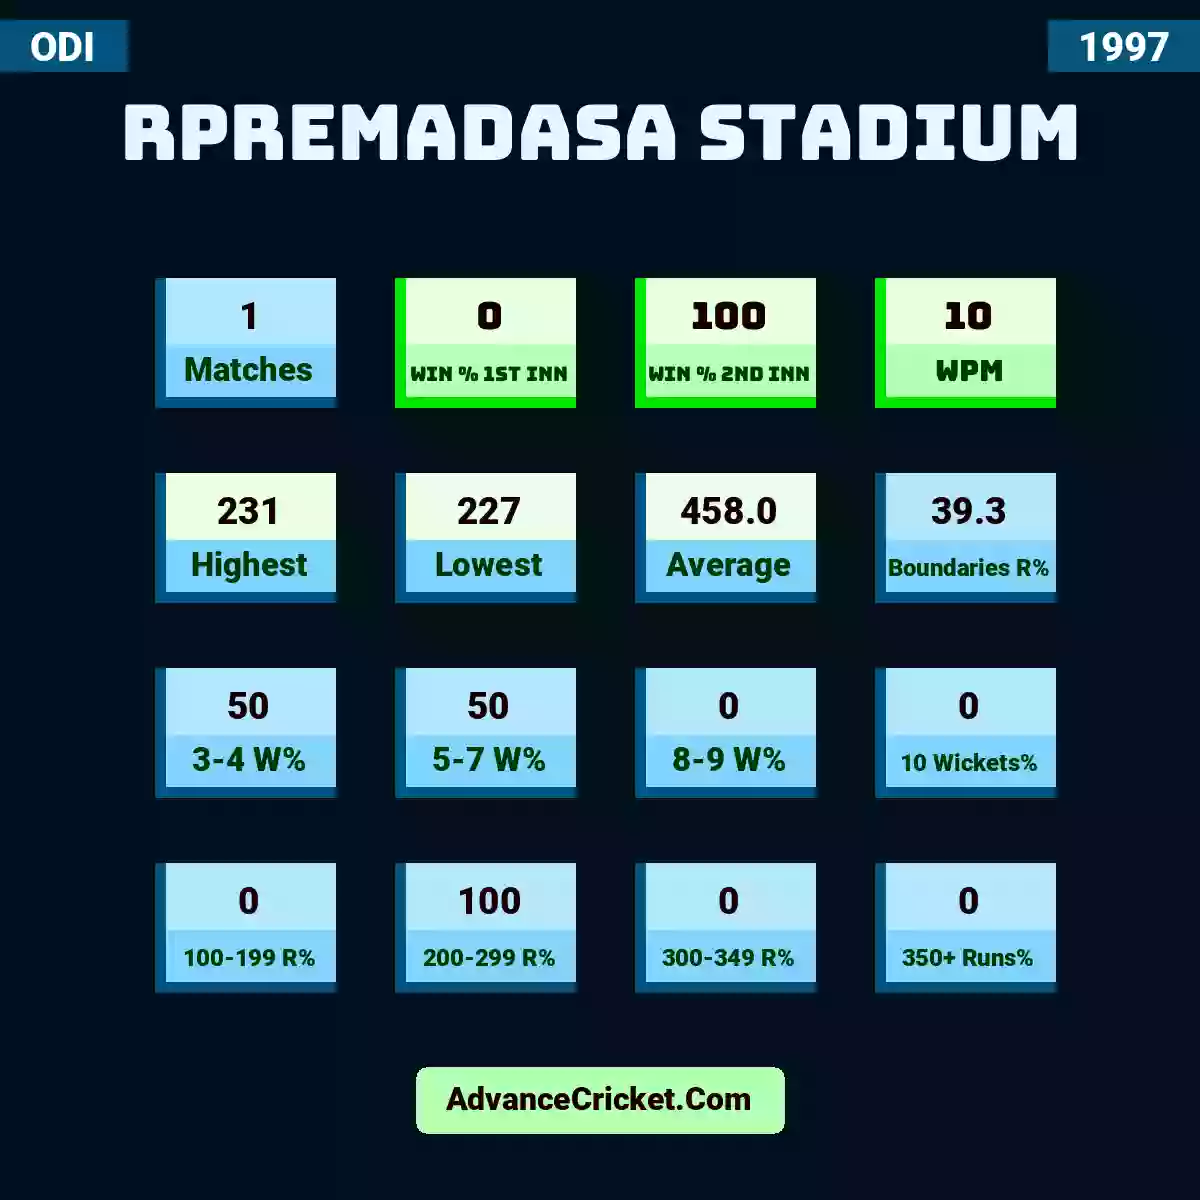 Image showing RPremadasa Stadium with Matches: 1, Win % 1st Inn: 0, Win % 2nd Inn: 100, WPM: 10, Highest: 231, Lowest: 227, Average: 458.0, Boundaries R%: 39.3, 3-4 W%: 50, 5-7 W%: 50, 8-9 W%: 0, 10 Wickets%: 0, 100-199 R%: 0, 200-299 R%: 100, 300-349 R%: 0, 350+ Runs%: 0.